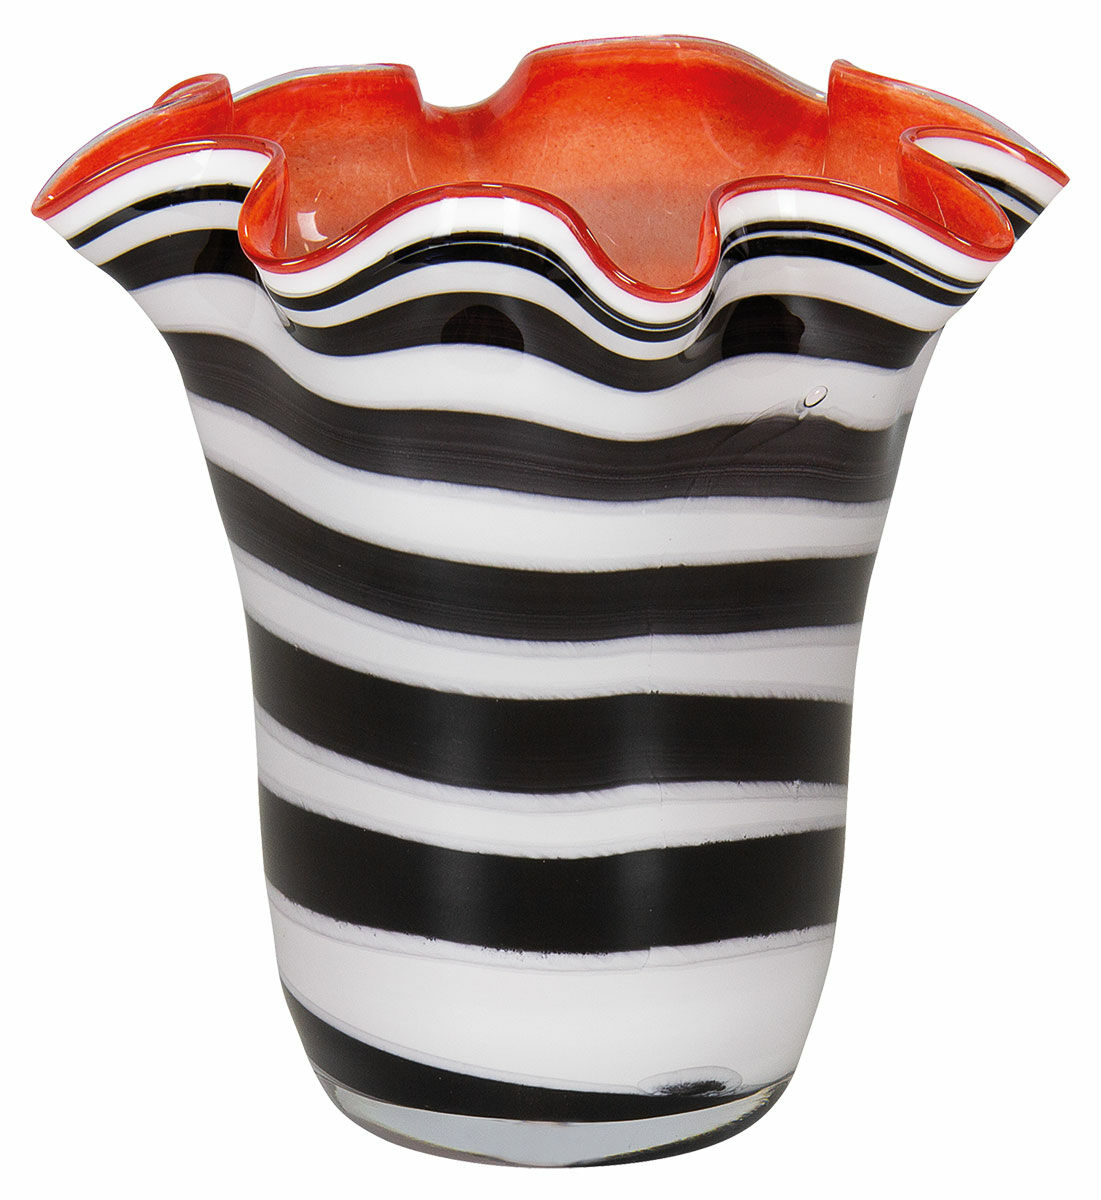 Glazen vaas "Zebra", oranje versie